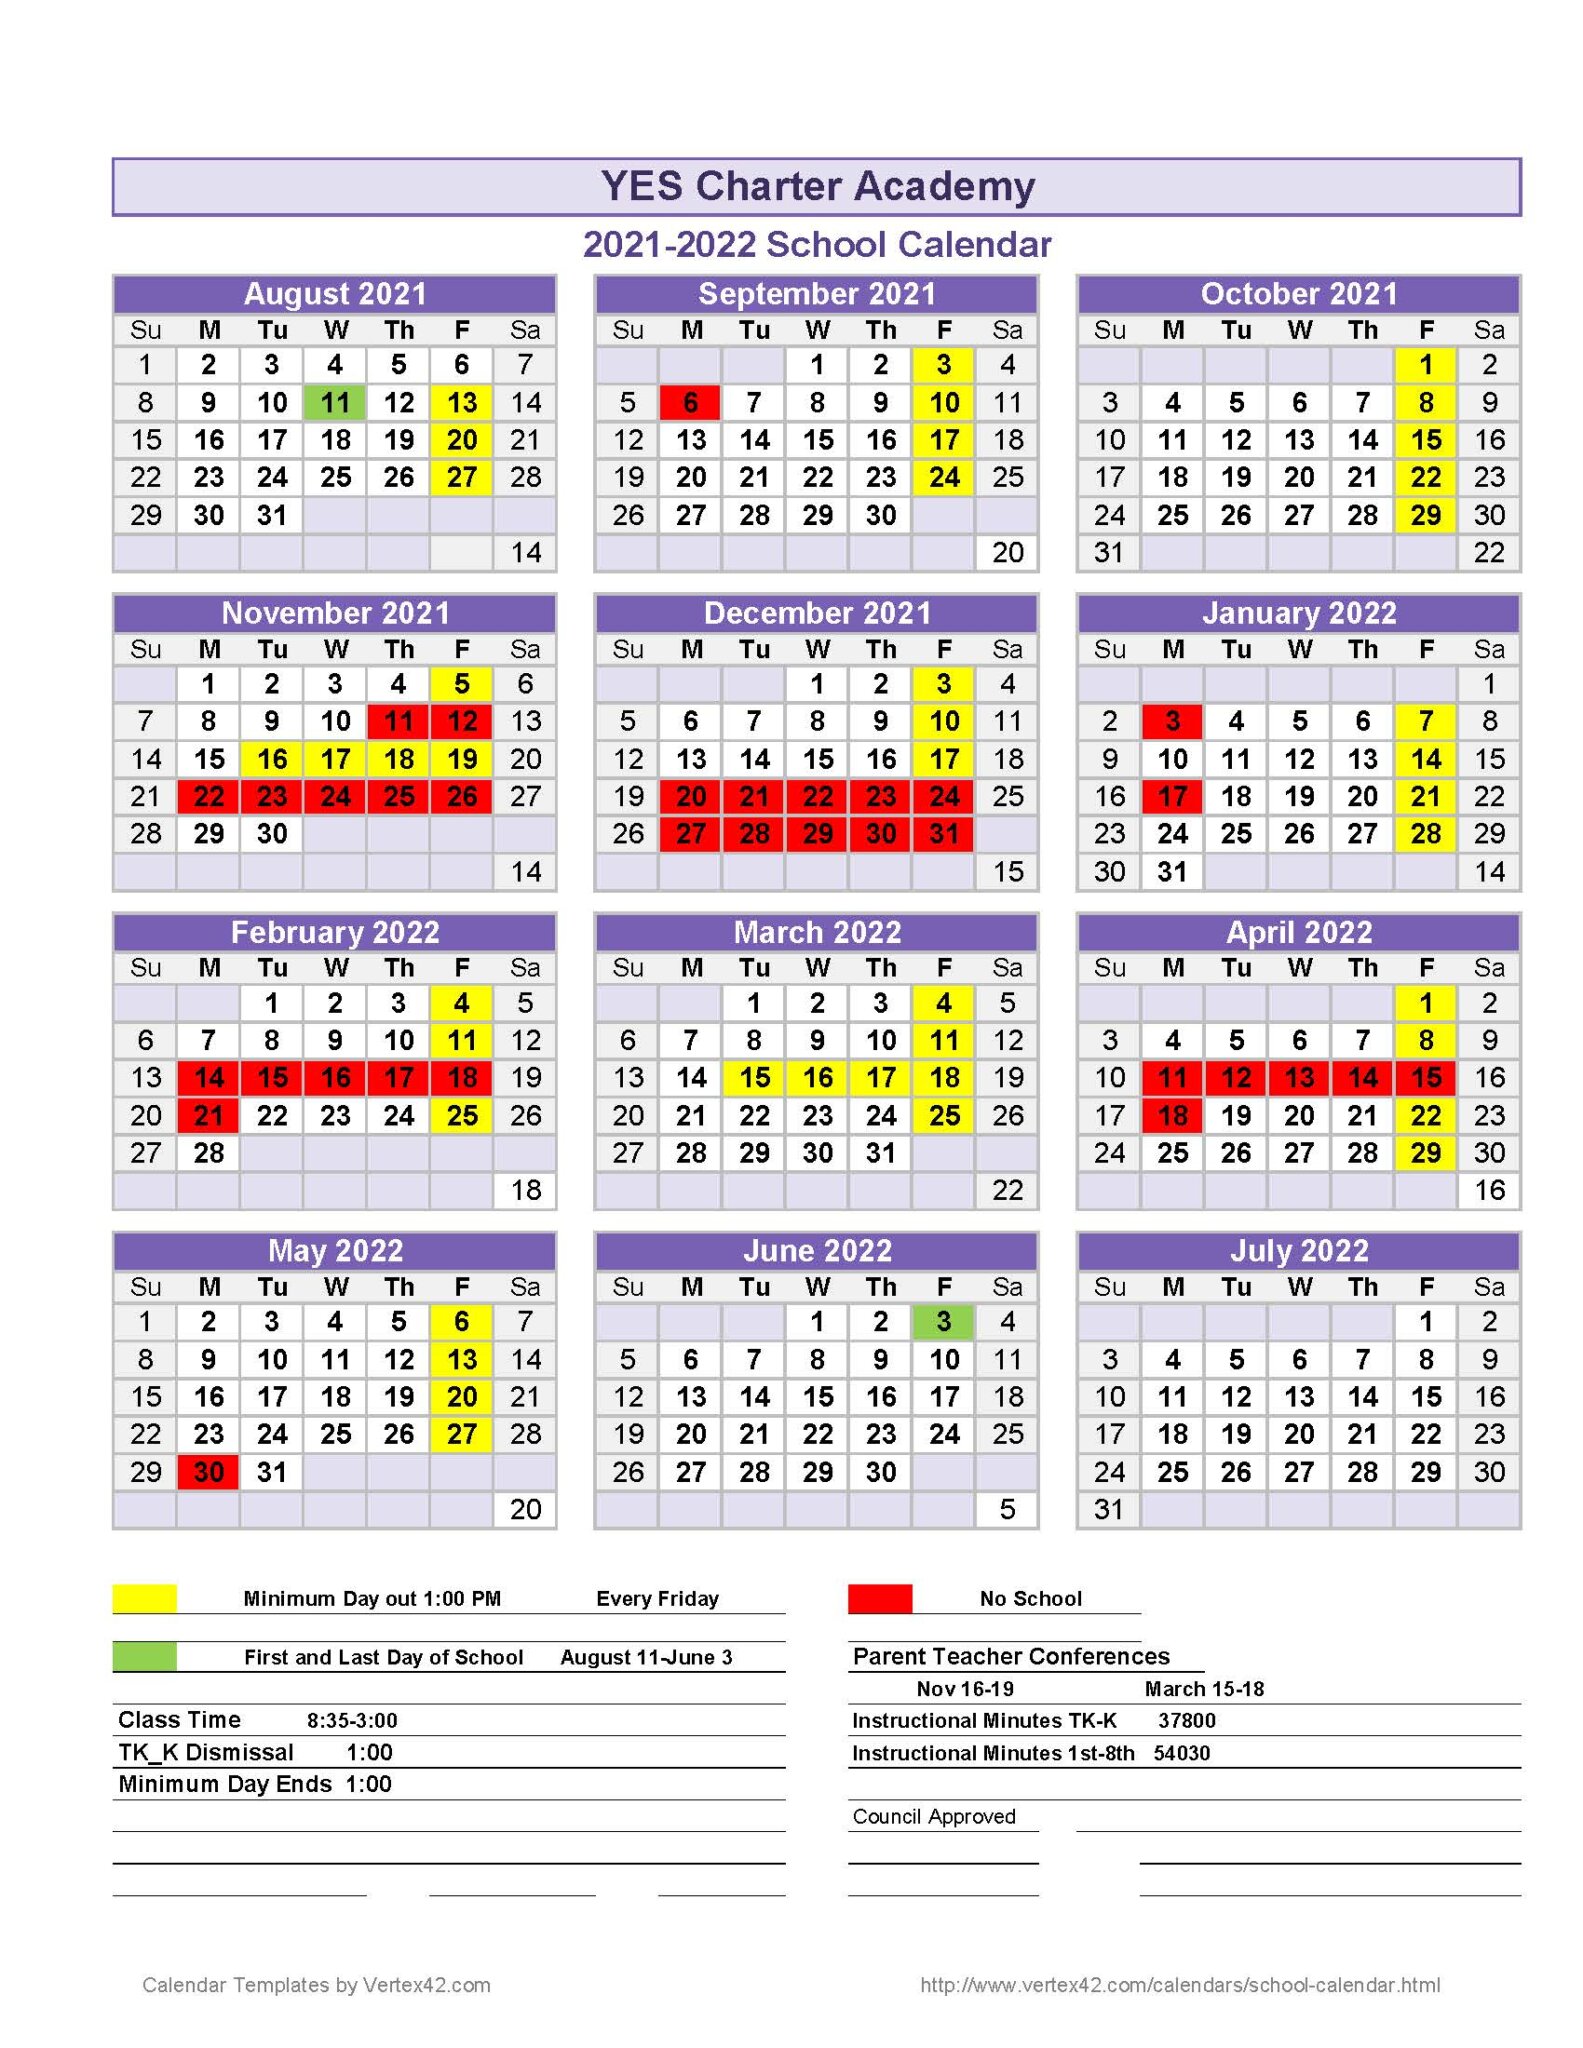 calendars-jefferson-christian-academy